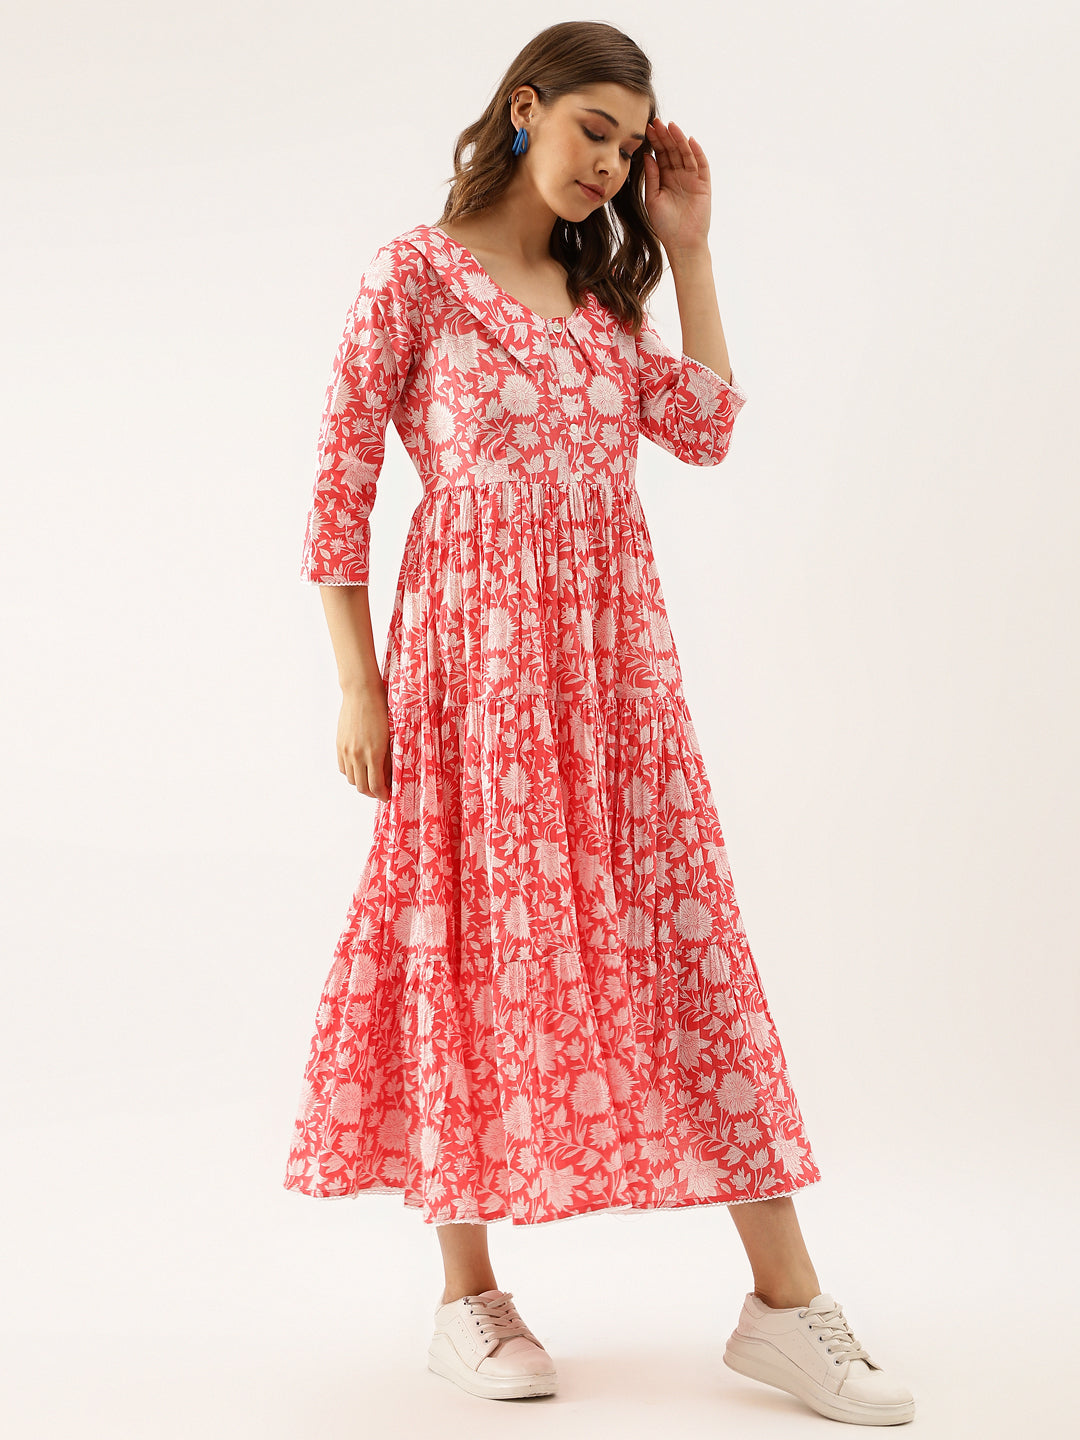 Women's Pink Floral Printed Cotton Ethnic Dress - Noz2Toz